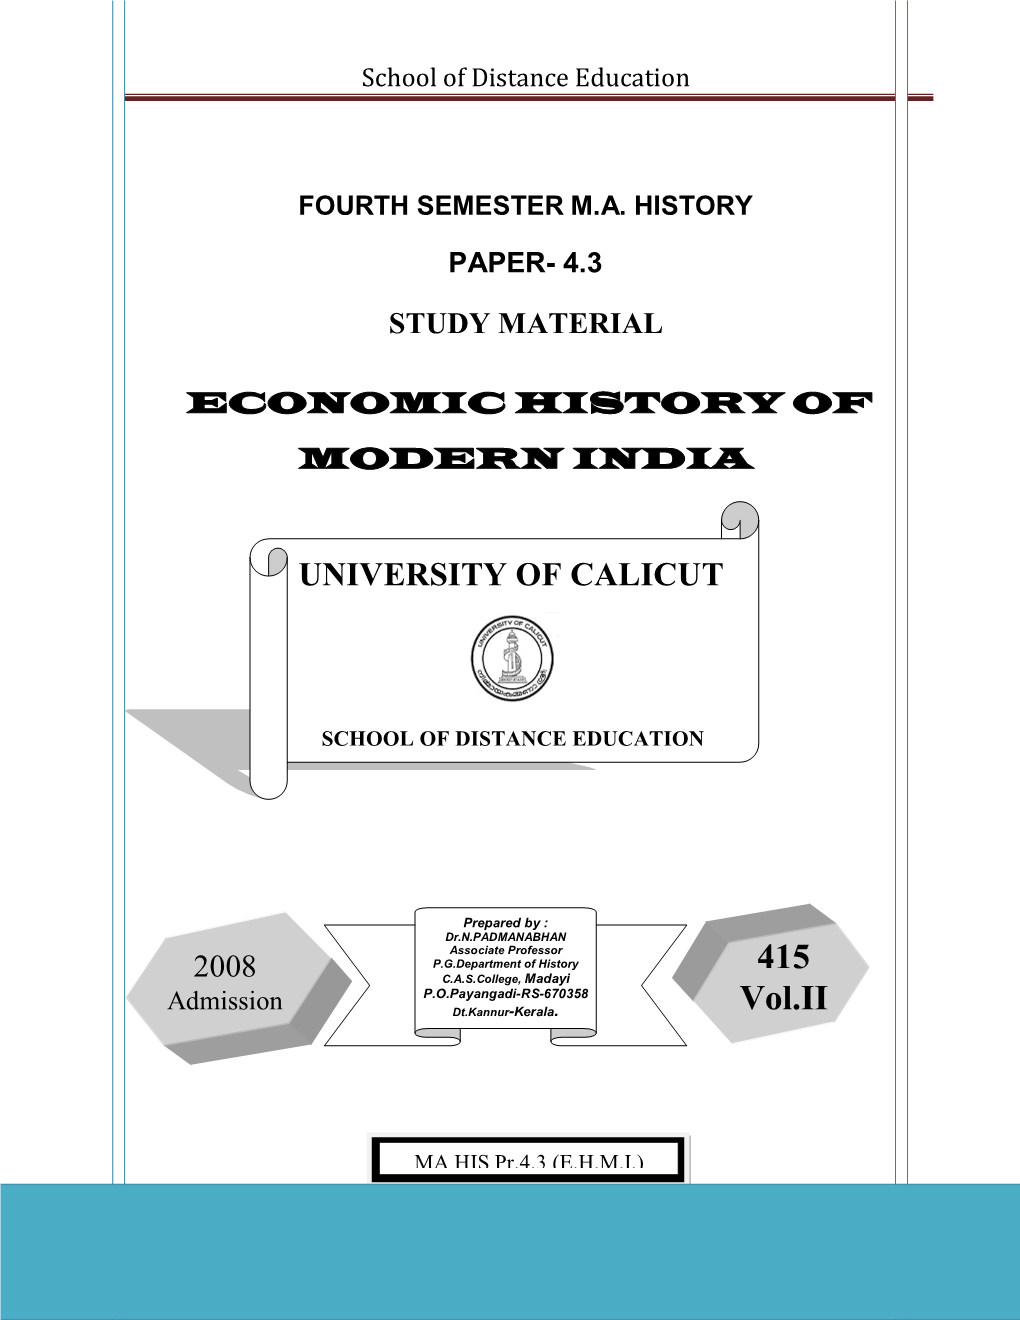 Economic History of Modern India